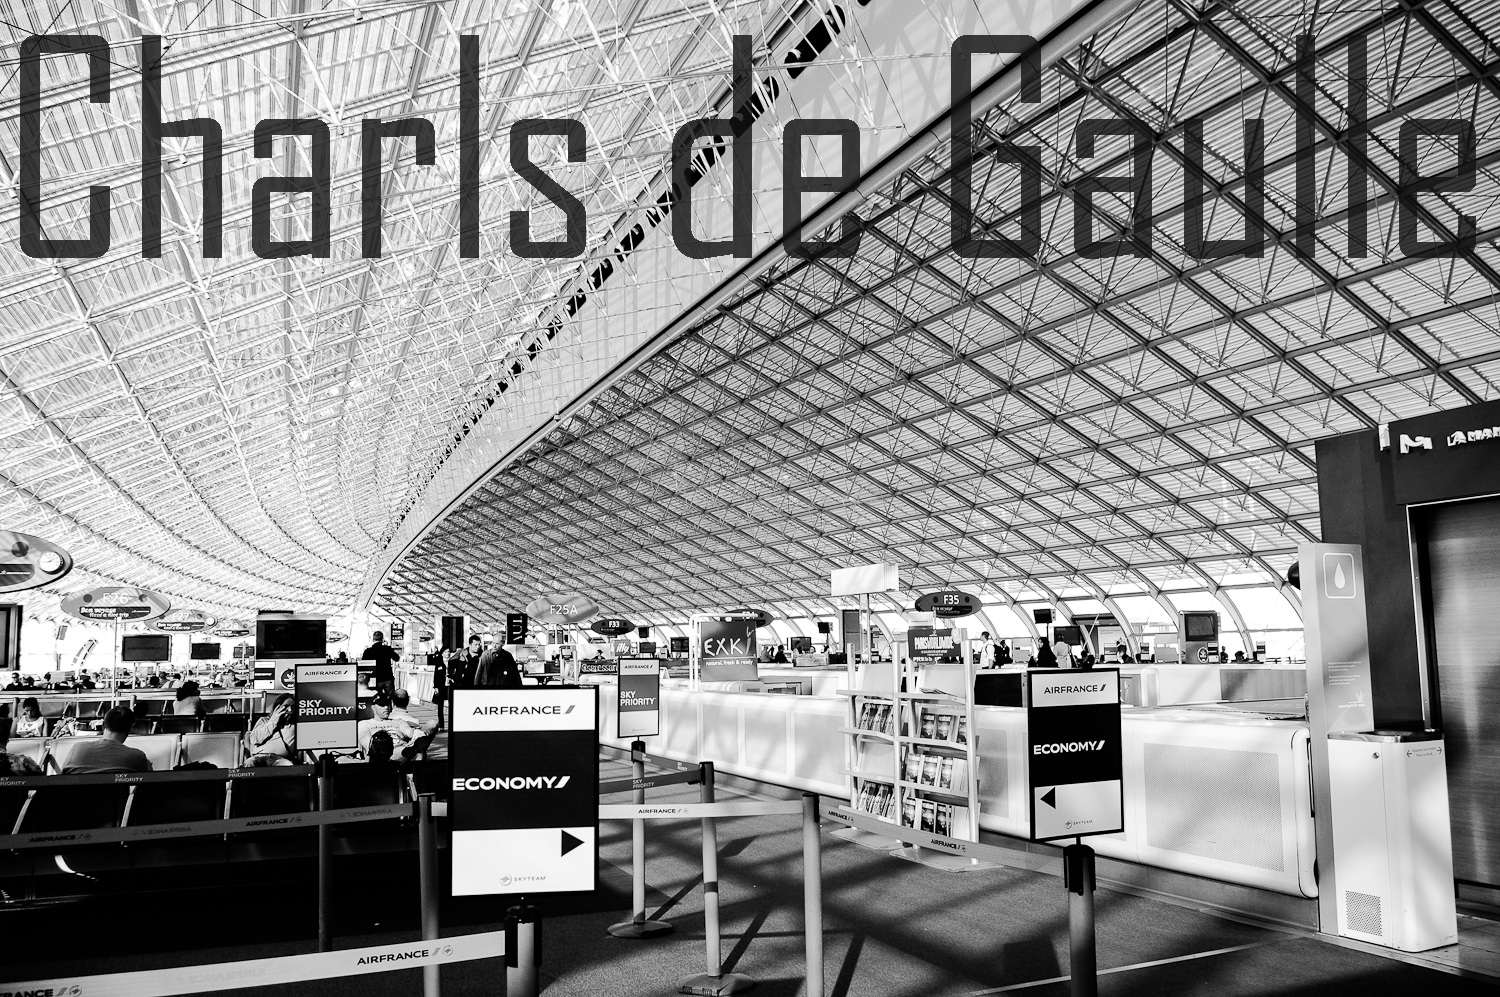 Аэропорт де голль вылет. Футболка Paris 1981 AJ Store Charles de Gaulle.